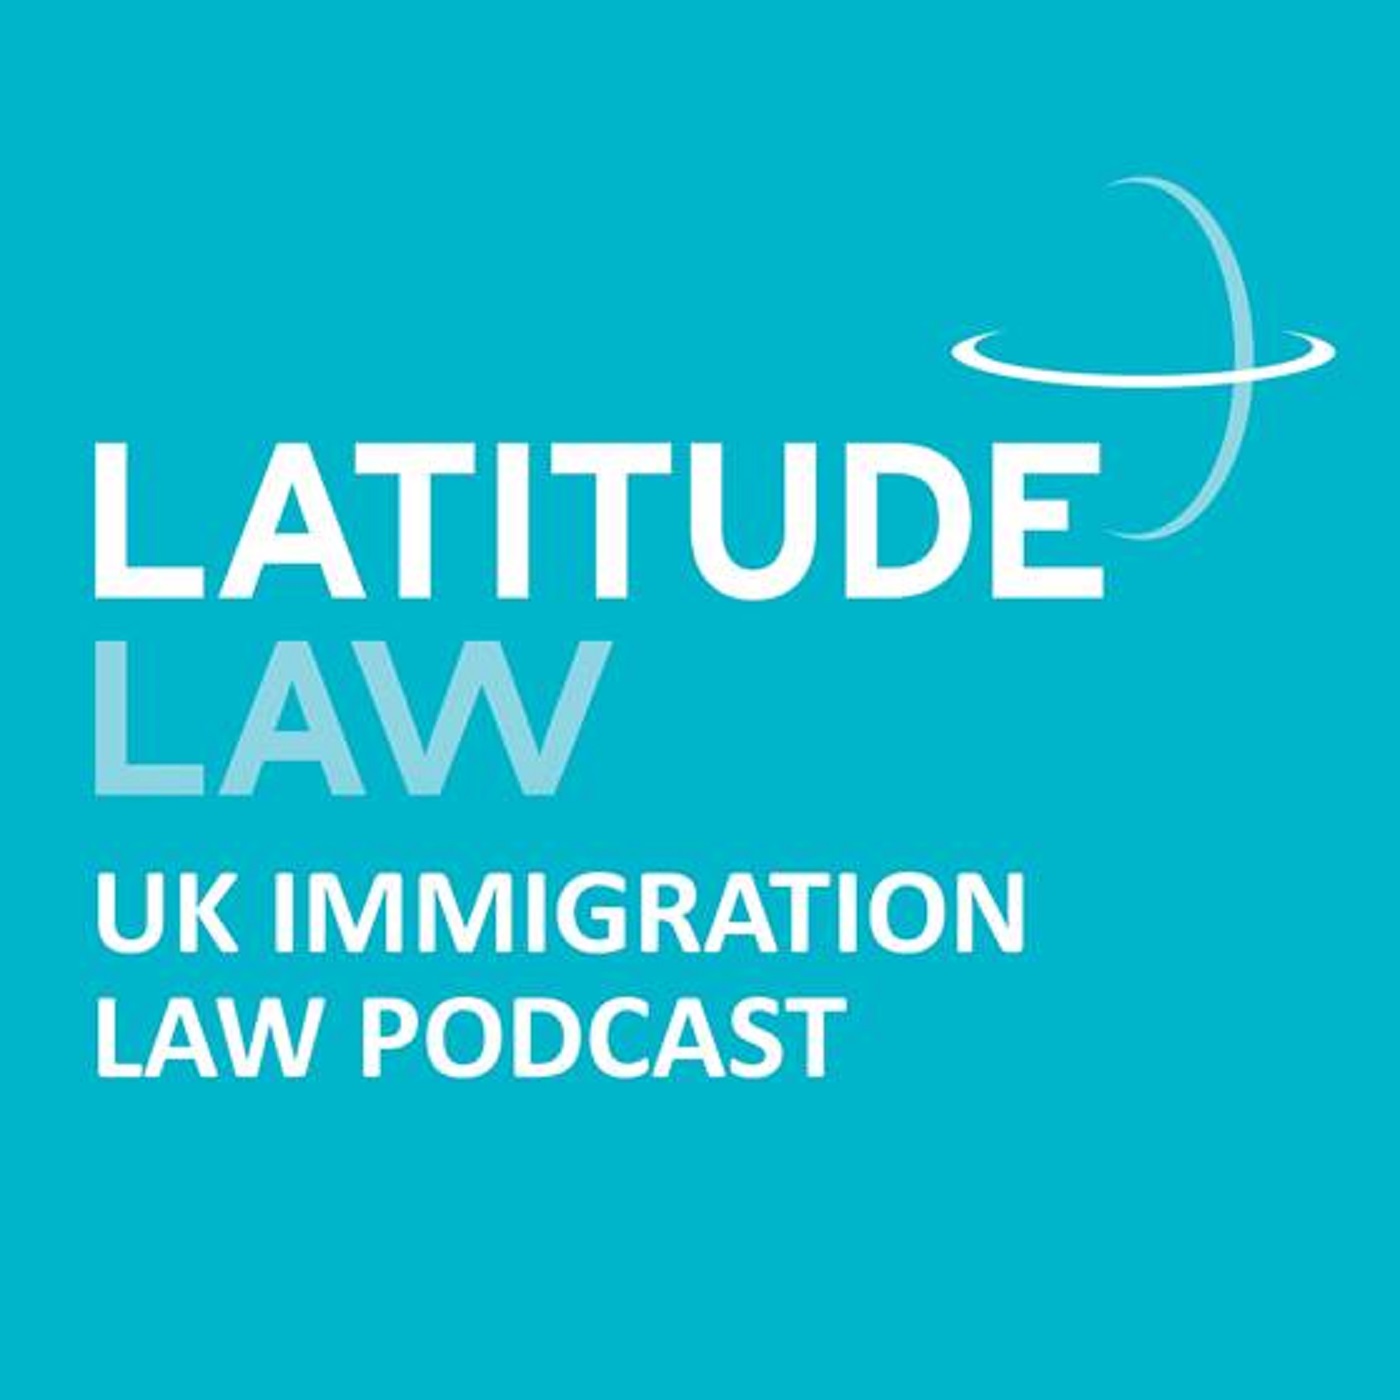 Latitude Law UK Immigration Law Podcast